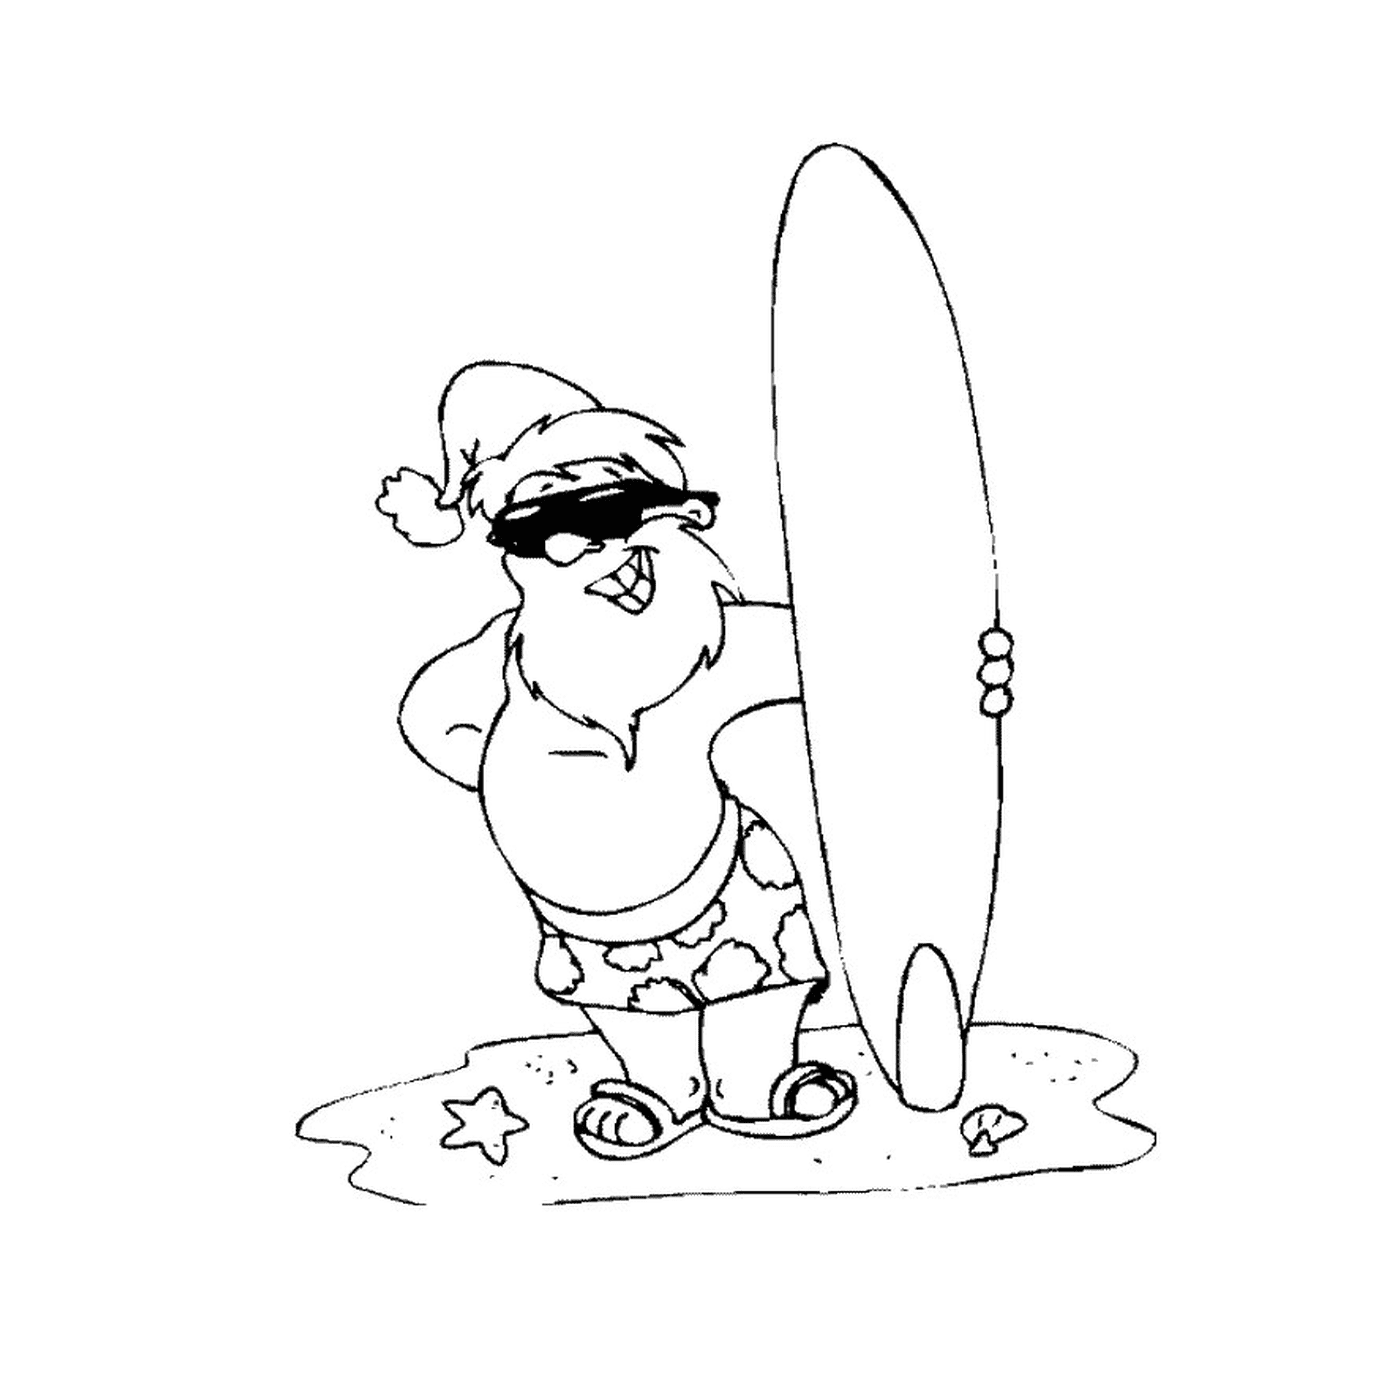  Santa holding a surfboard 